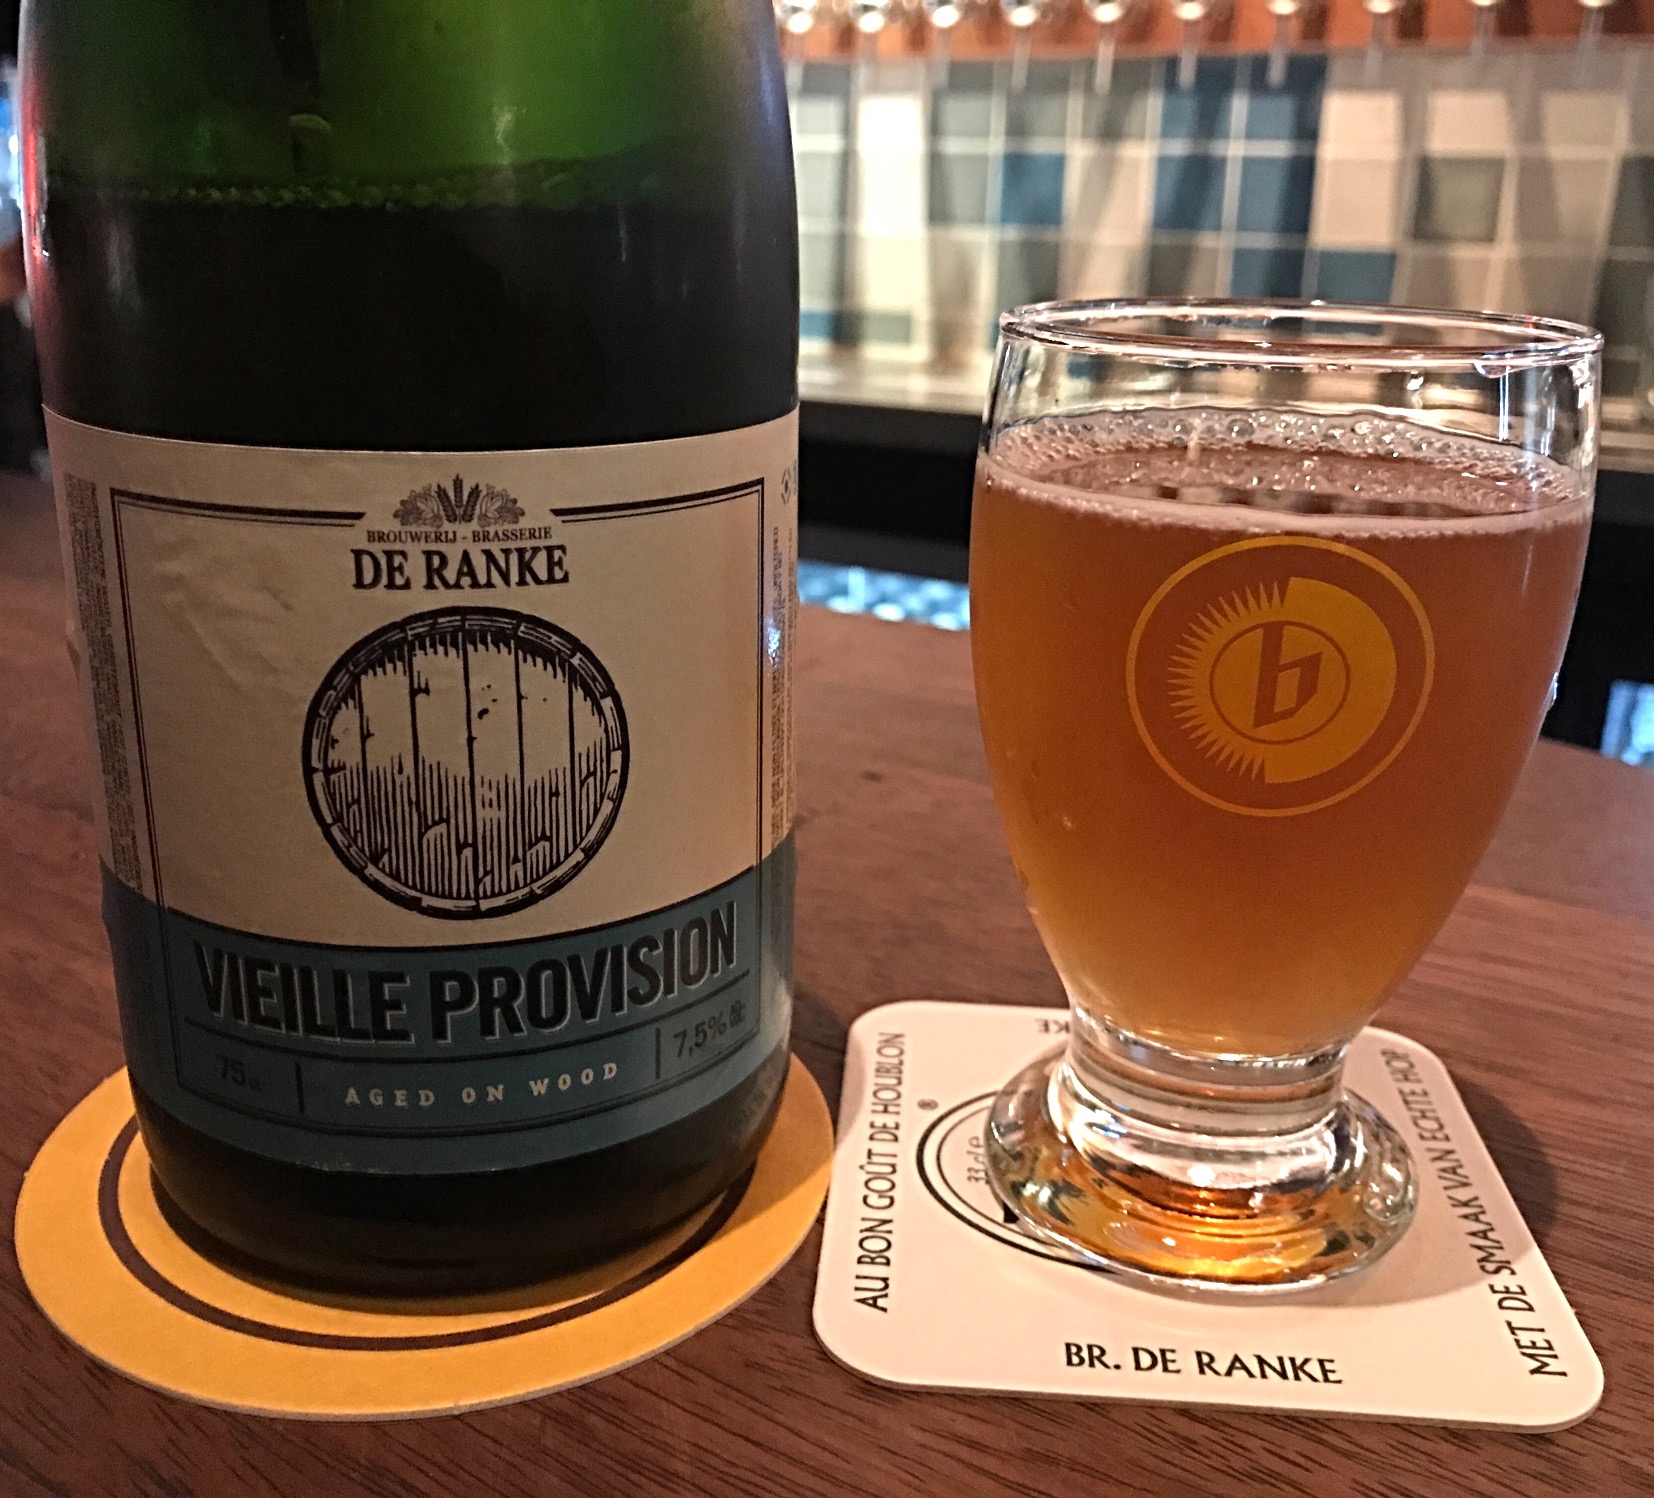 Vieille Provision by Brouwerij De Ranke